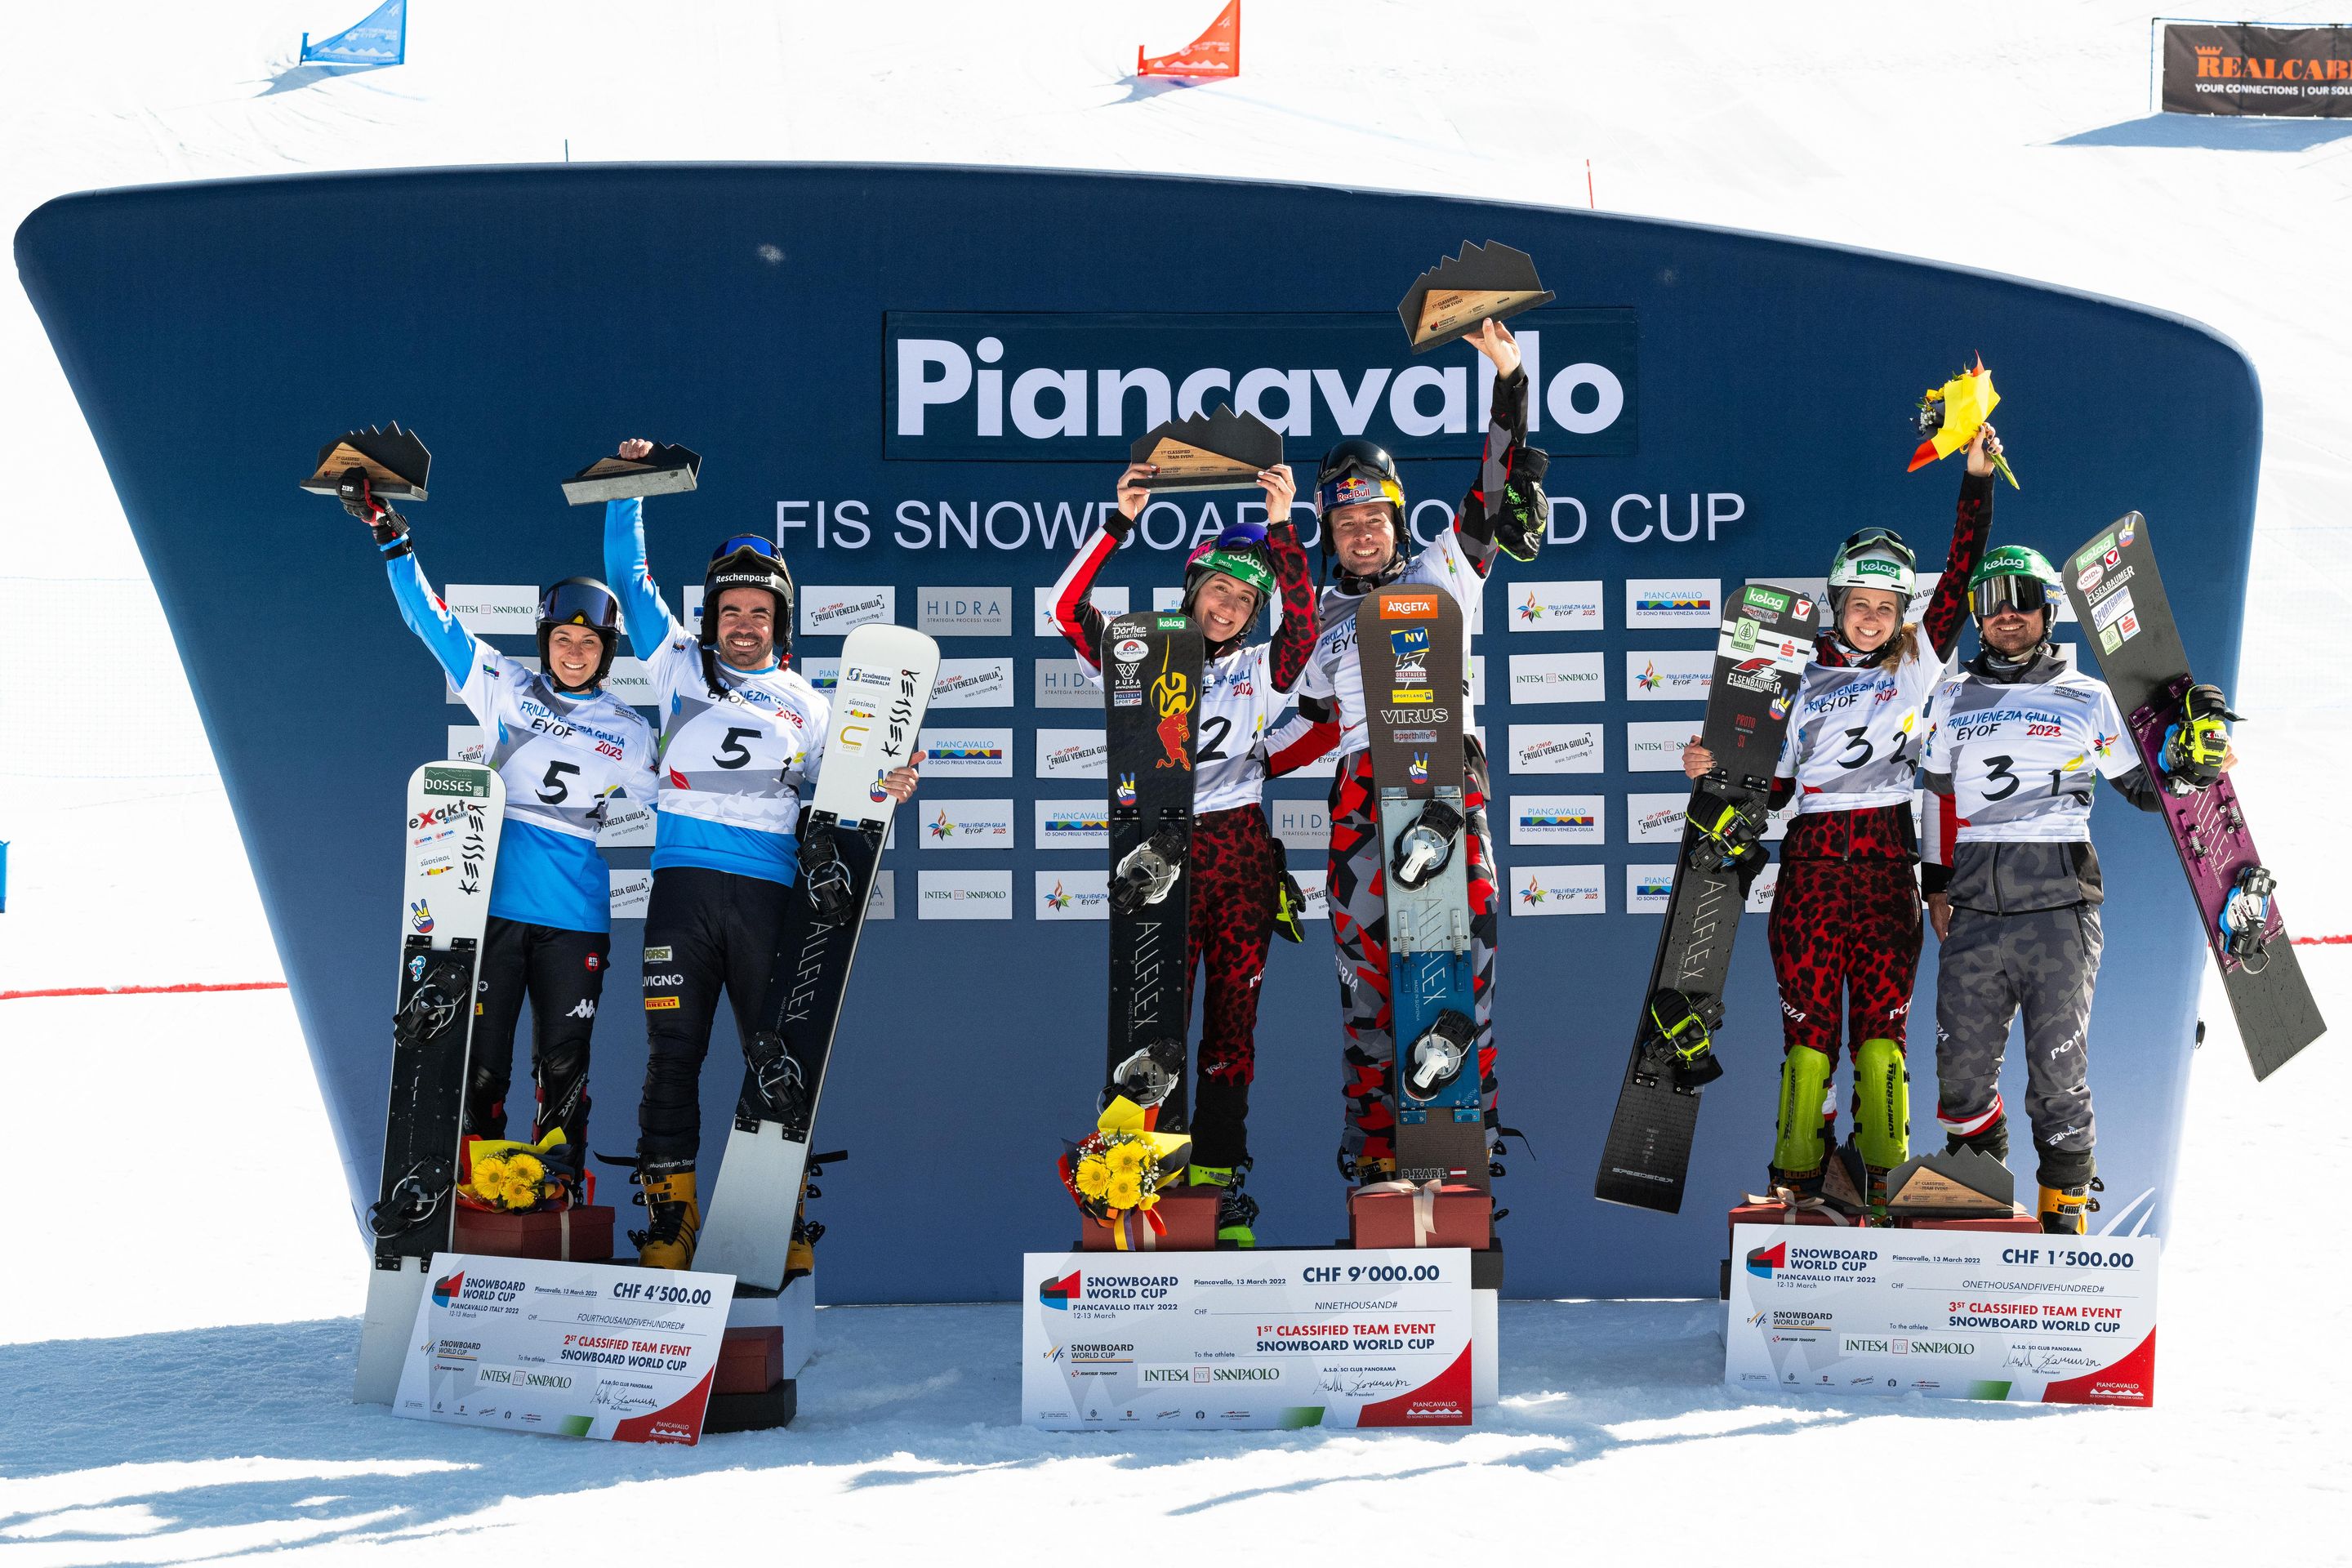 FIS Snowboard World Cup - Piancavallo ITA - Snowboard Parallel Team Event - Podium with 2nd team Italy 1 (CORATTI Edwin and OCHNER Nadya), 1st team Austria 2 (KARL Benjamin and ULBING Daniela) and 3rd team Austria 3 (PAYER Alexander and SCHOEFFMANN Sabine) © Miha Matavz/FIS